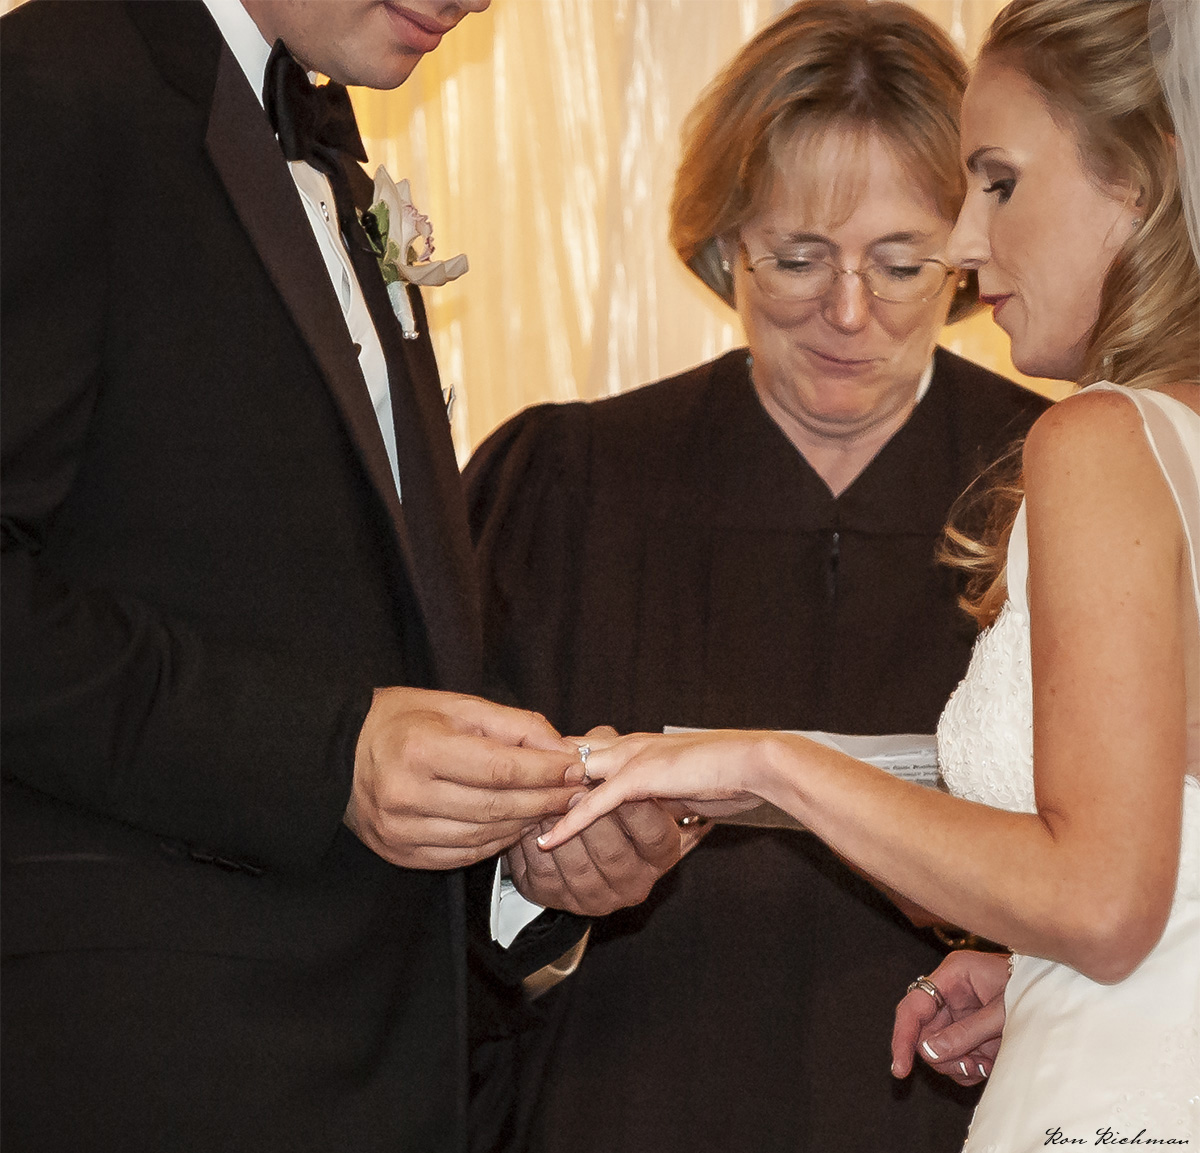 Boston Wedding Photographer Ron Richman photographs the groom putting the diamond ring on her finger.